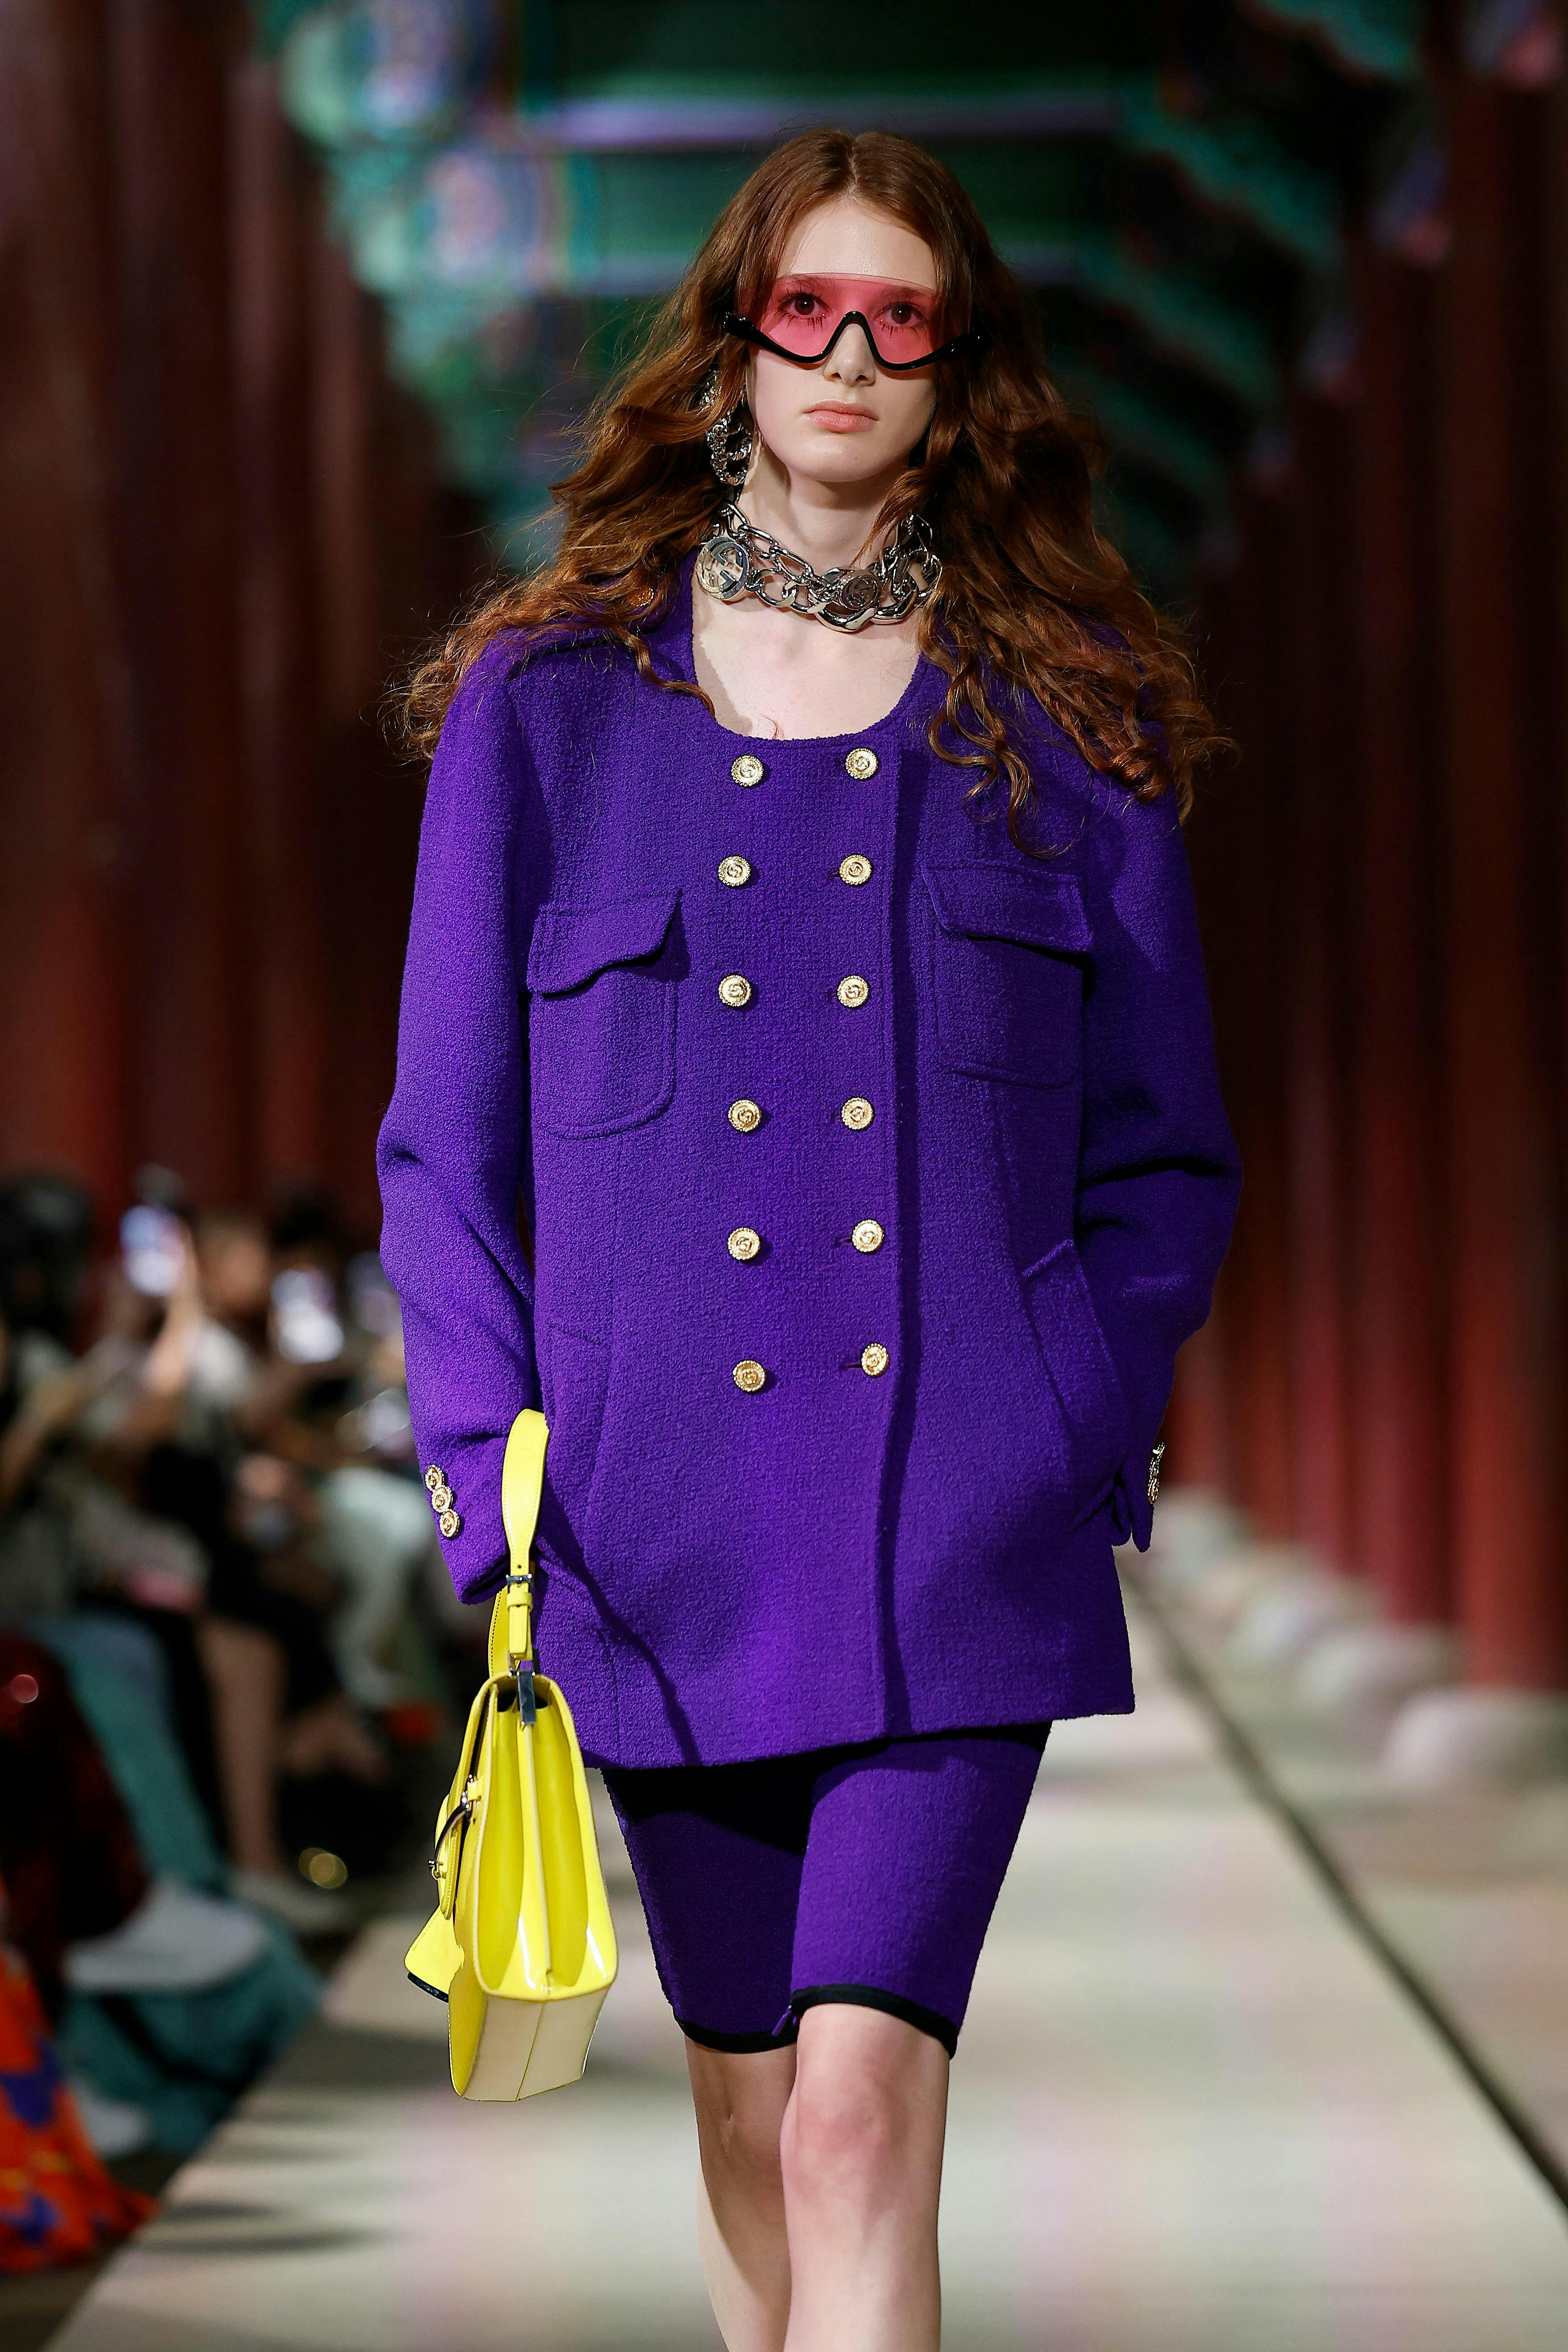 seoul fashion bag handbag adult female person woman long sleeve coat necklace